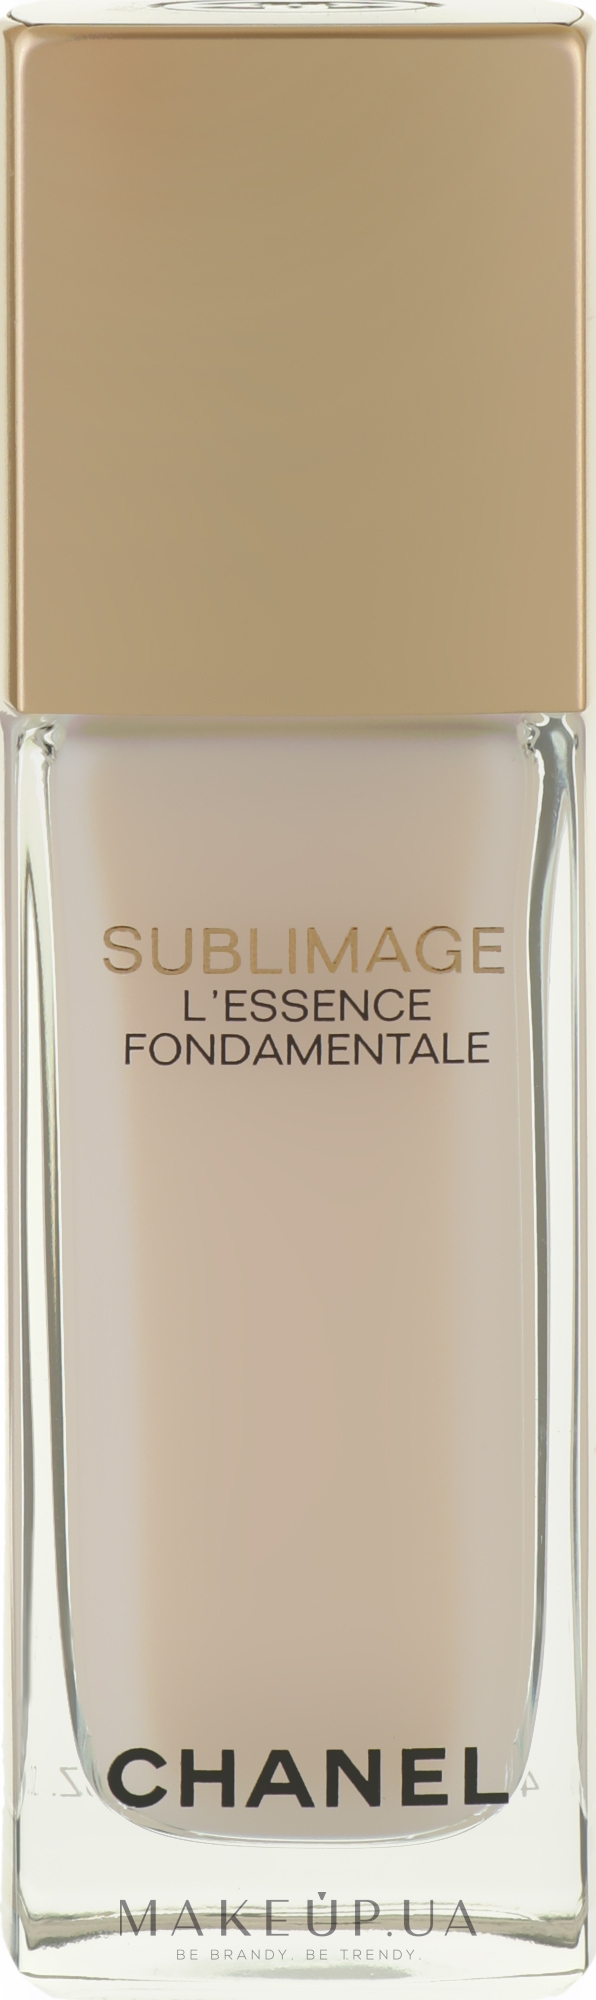 Chanel Sublimage LEssence Fondamentale Ultimate Redefining Concentrate  1ml03 floz sample sachet